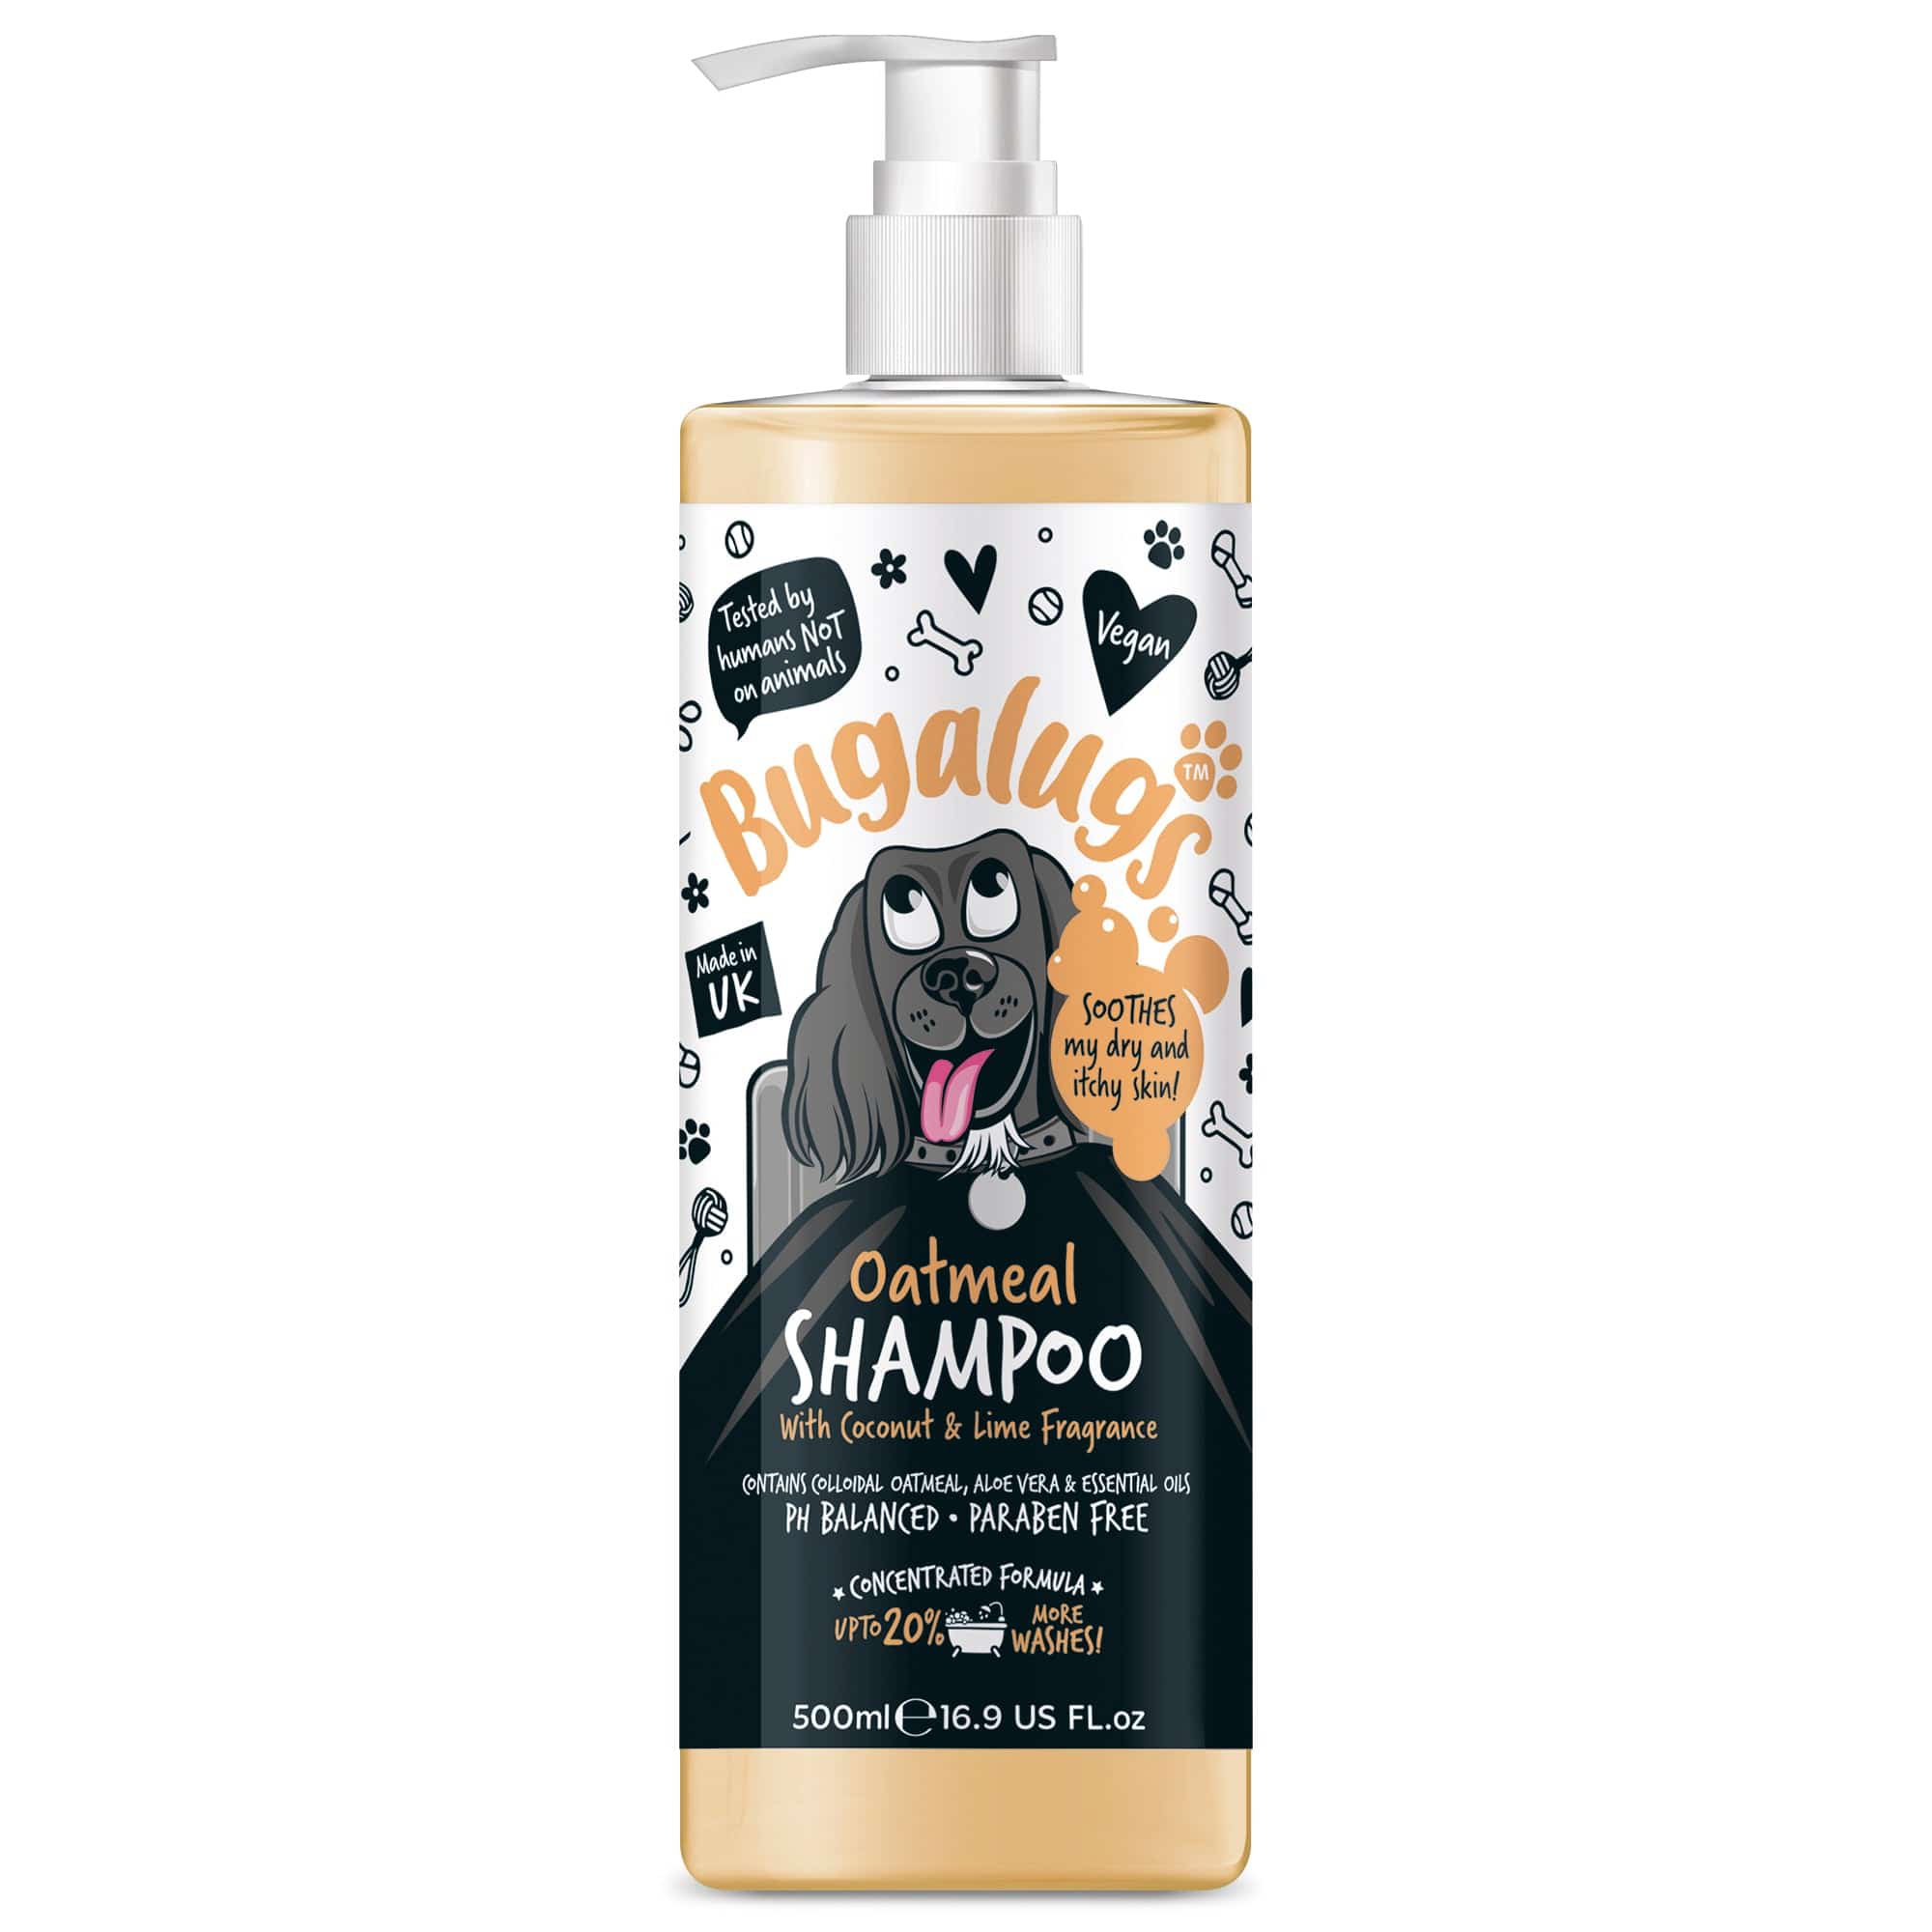 Bugalugs™ Oatmeal Shampoo - 500ml